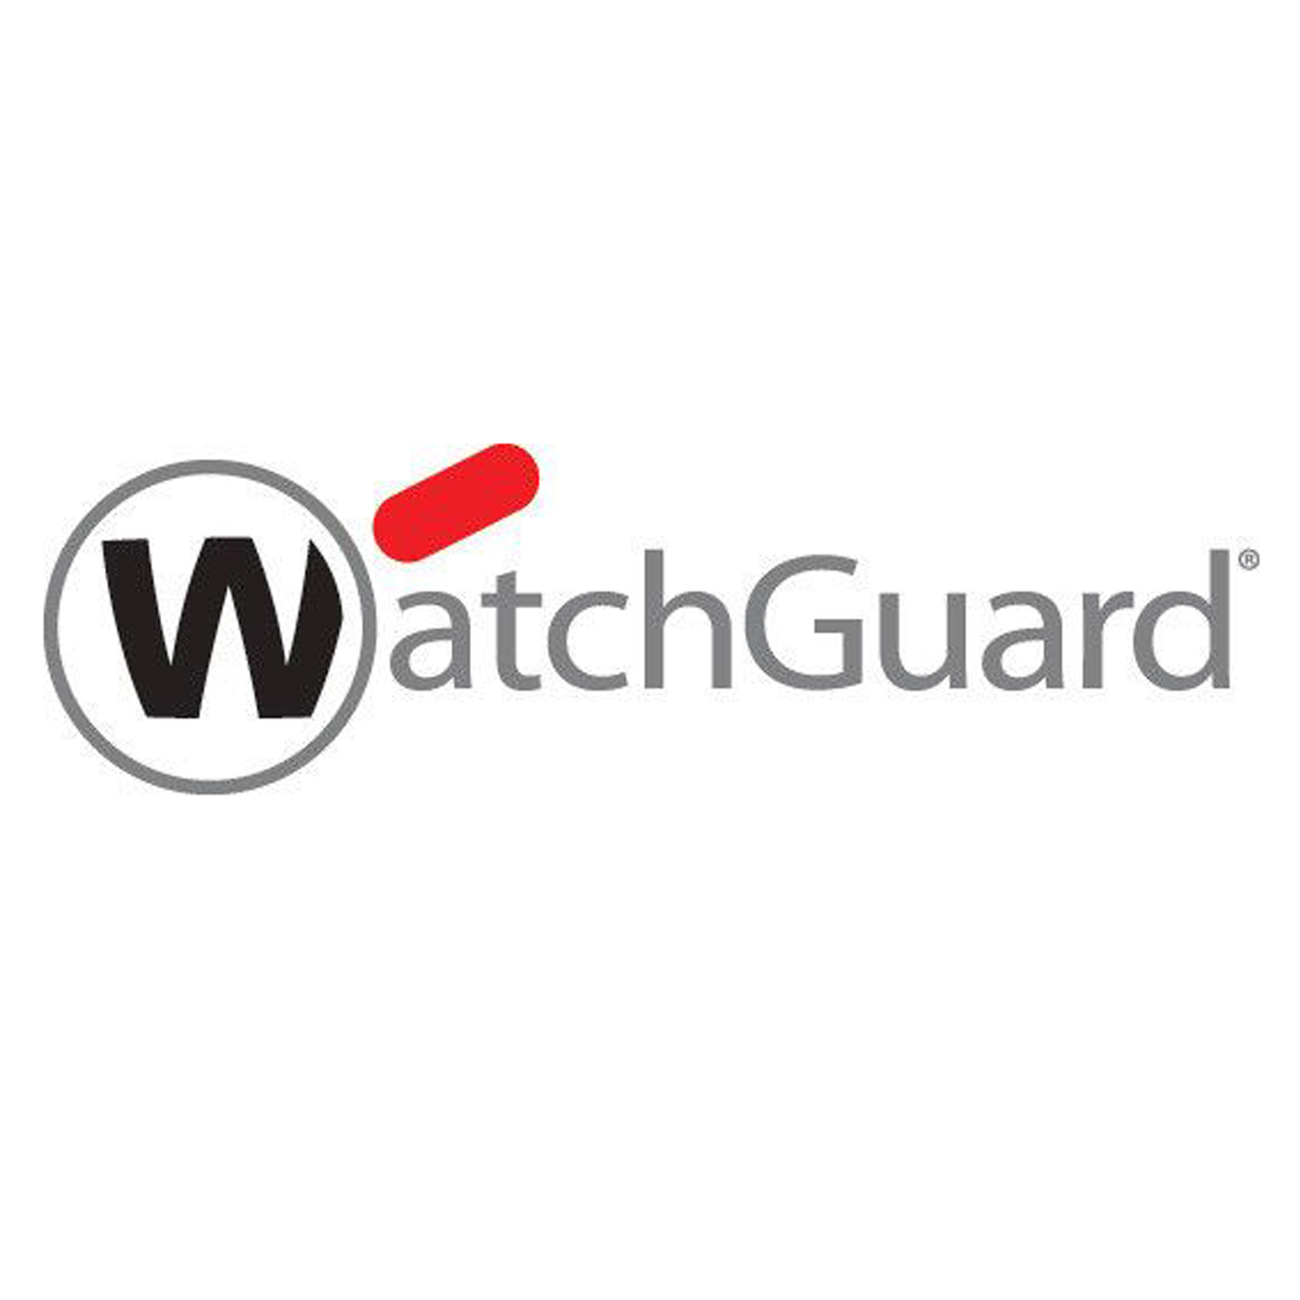 WatchGuard Data Loss Prevention 1-yr for FireboxV Small